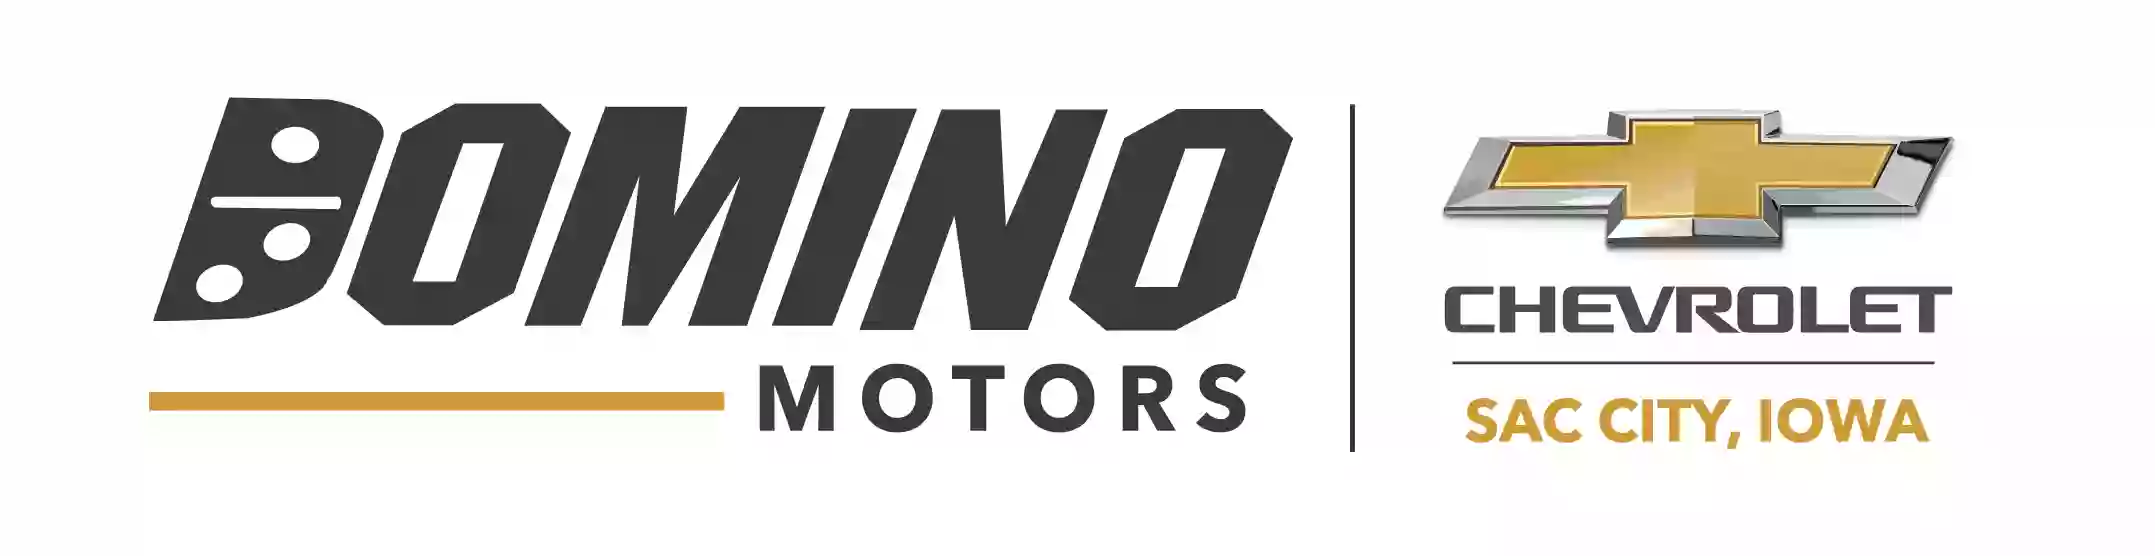 DOMINO MOTORS, INC. Chevrolet